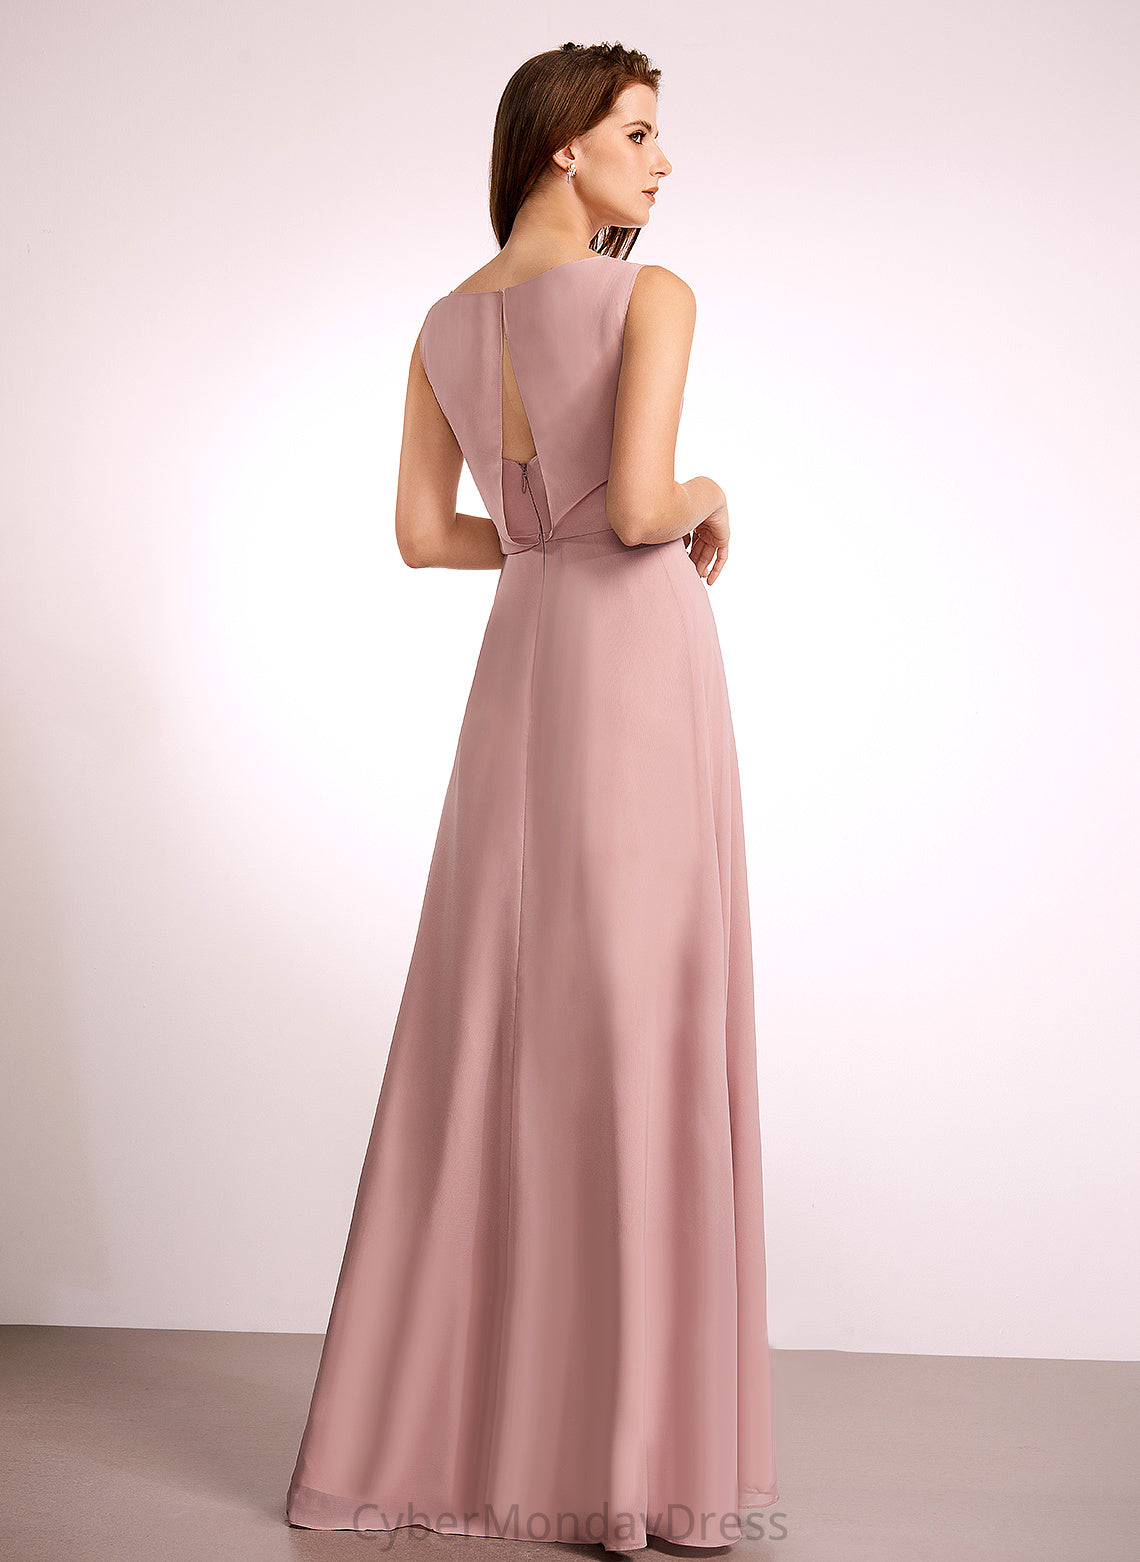 Silhouette A-Line Length Bow(s) Embellishment Straps Floor-Length Fabric Una Floor Length Sleeveless A-Line/Princess Bridesmaid Dresses